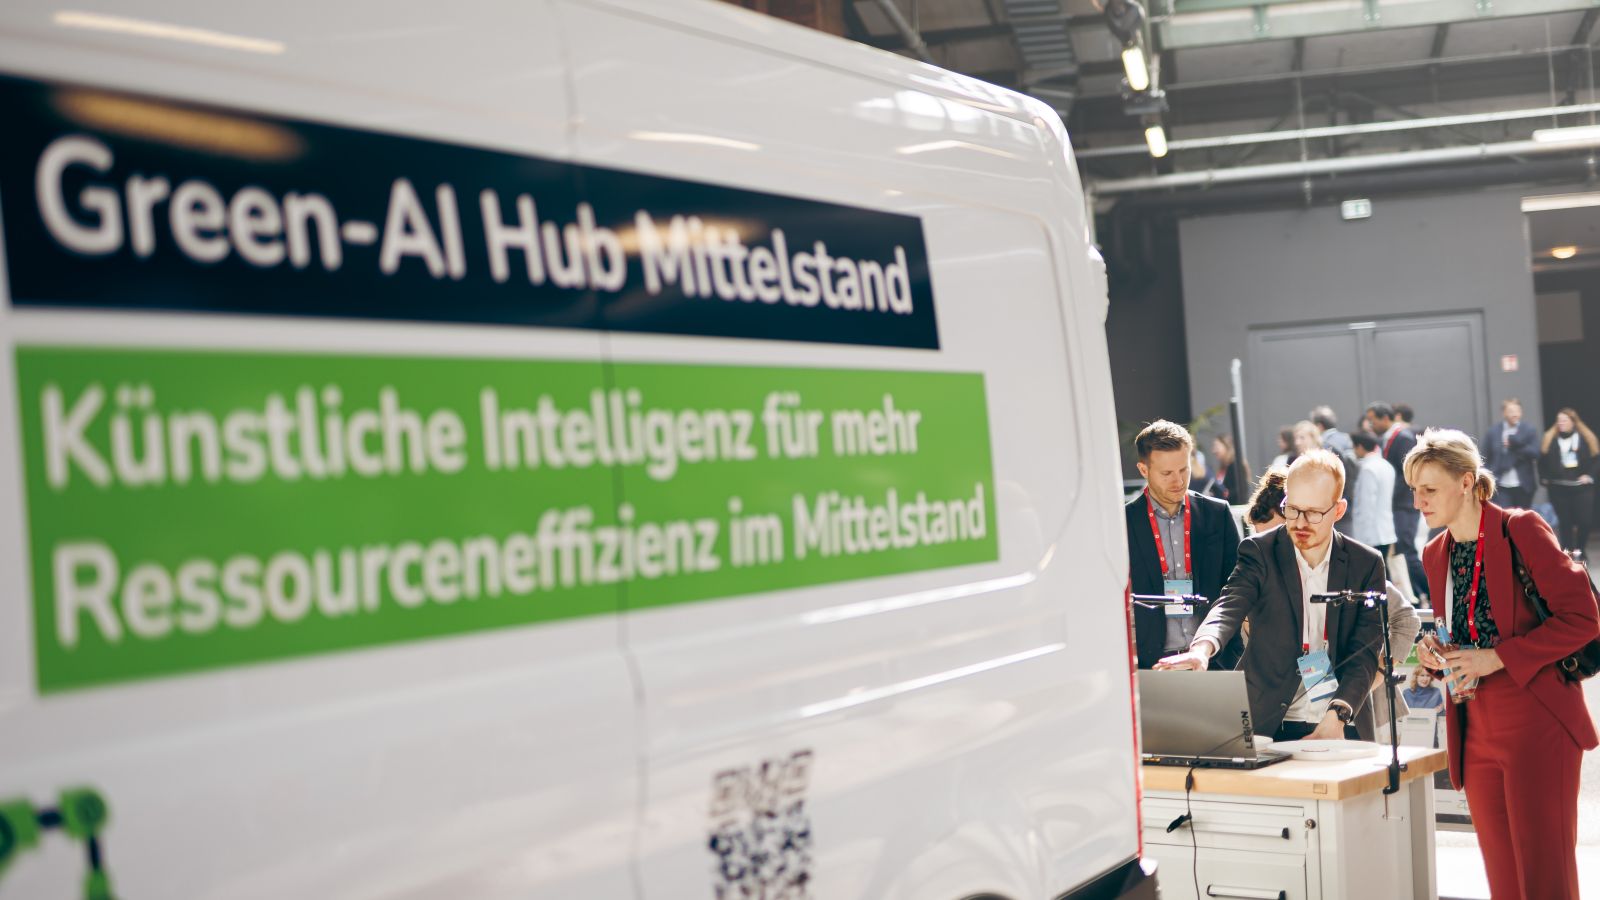 Green-AI Hub Mobil auf dem Zukunftsforum 